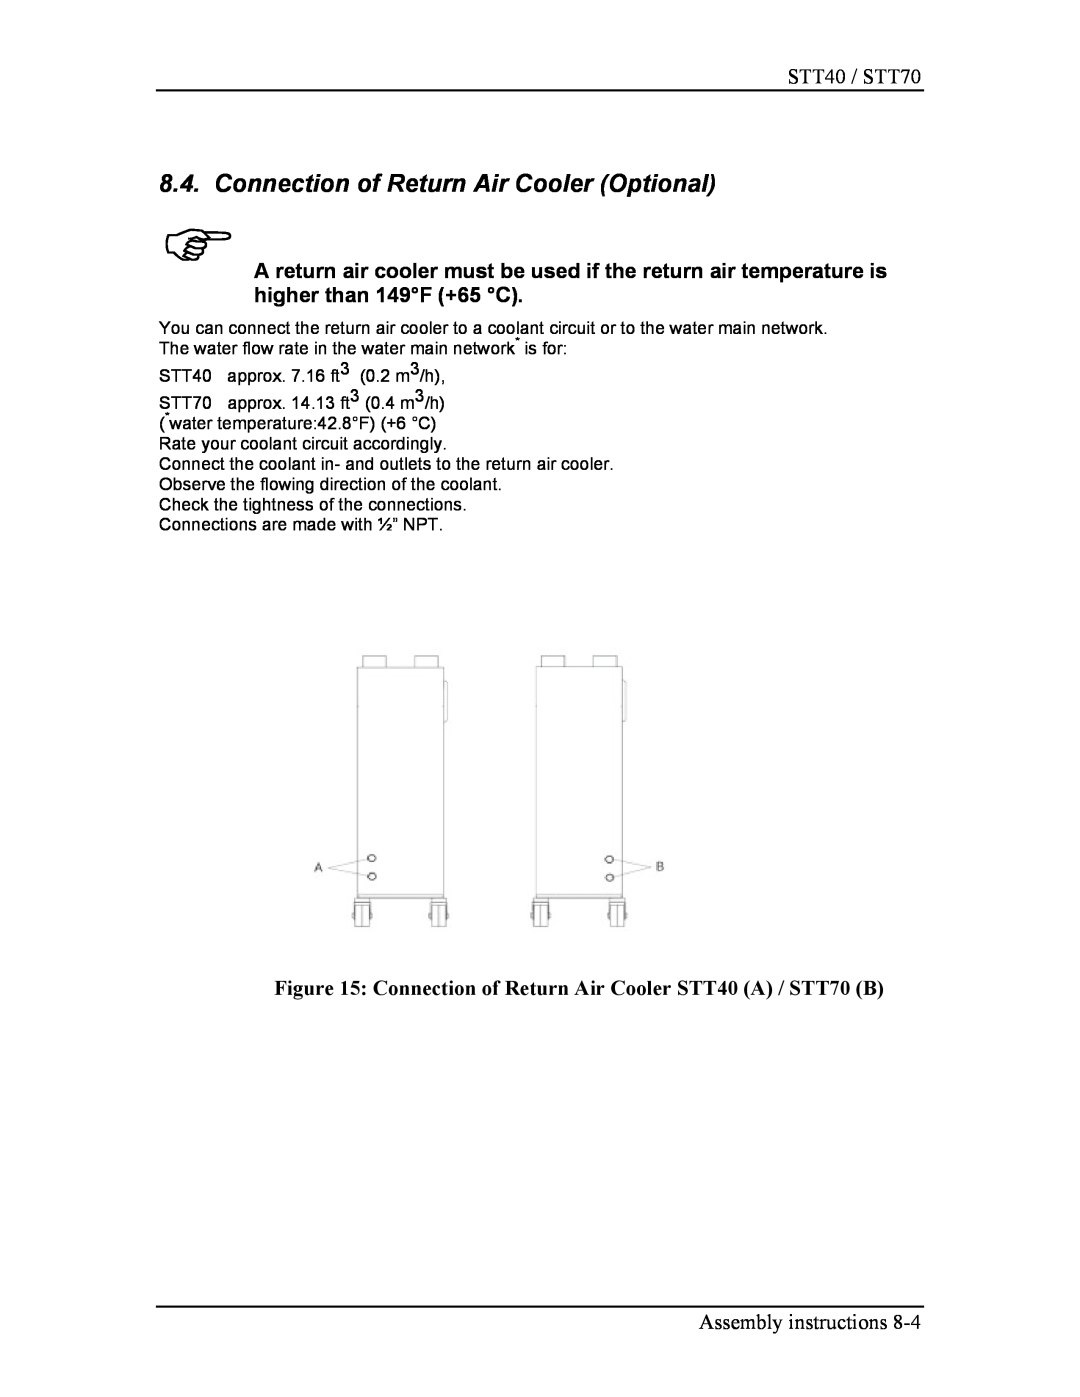 Sterling STT40, STT70 manual Connection of Return Air Cooler Optional 